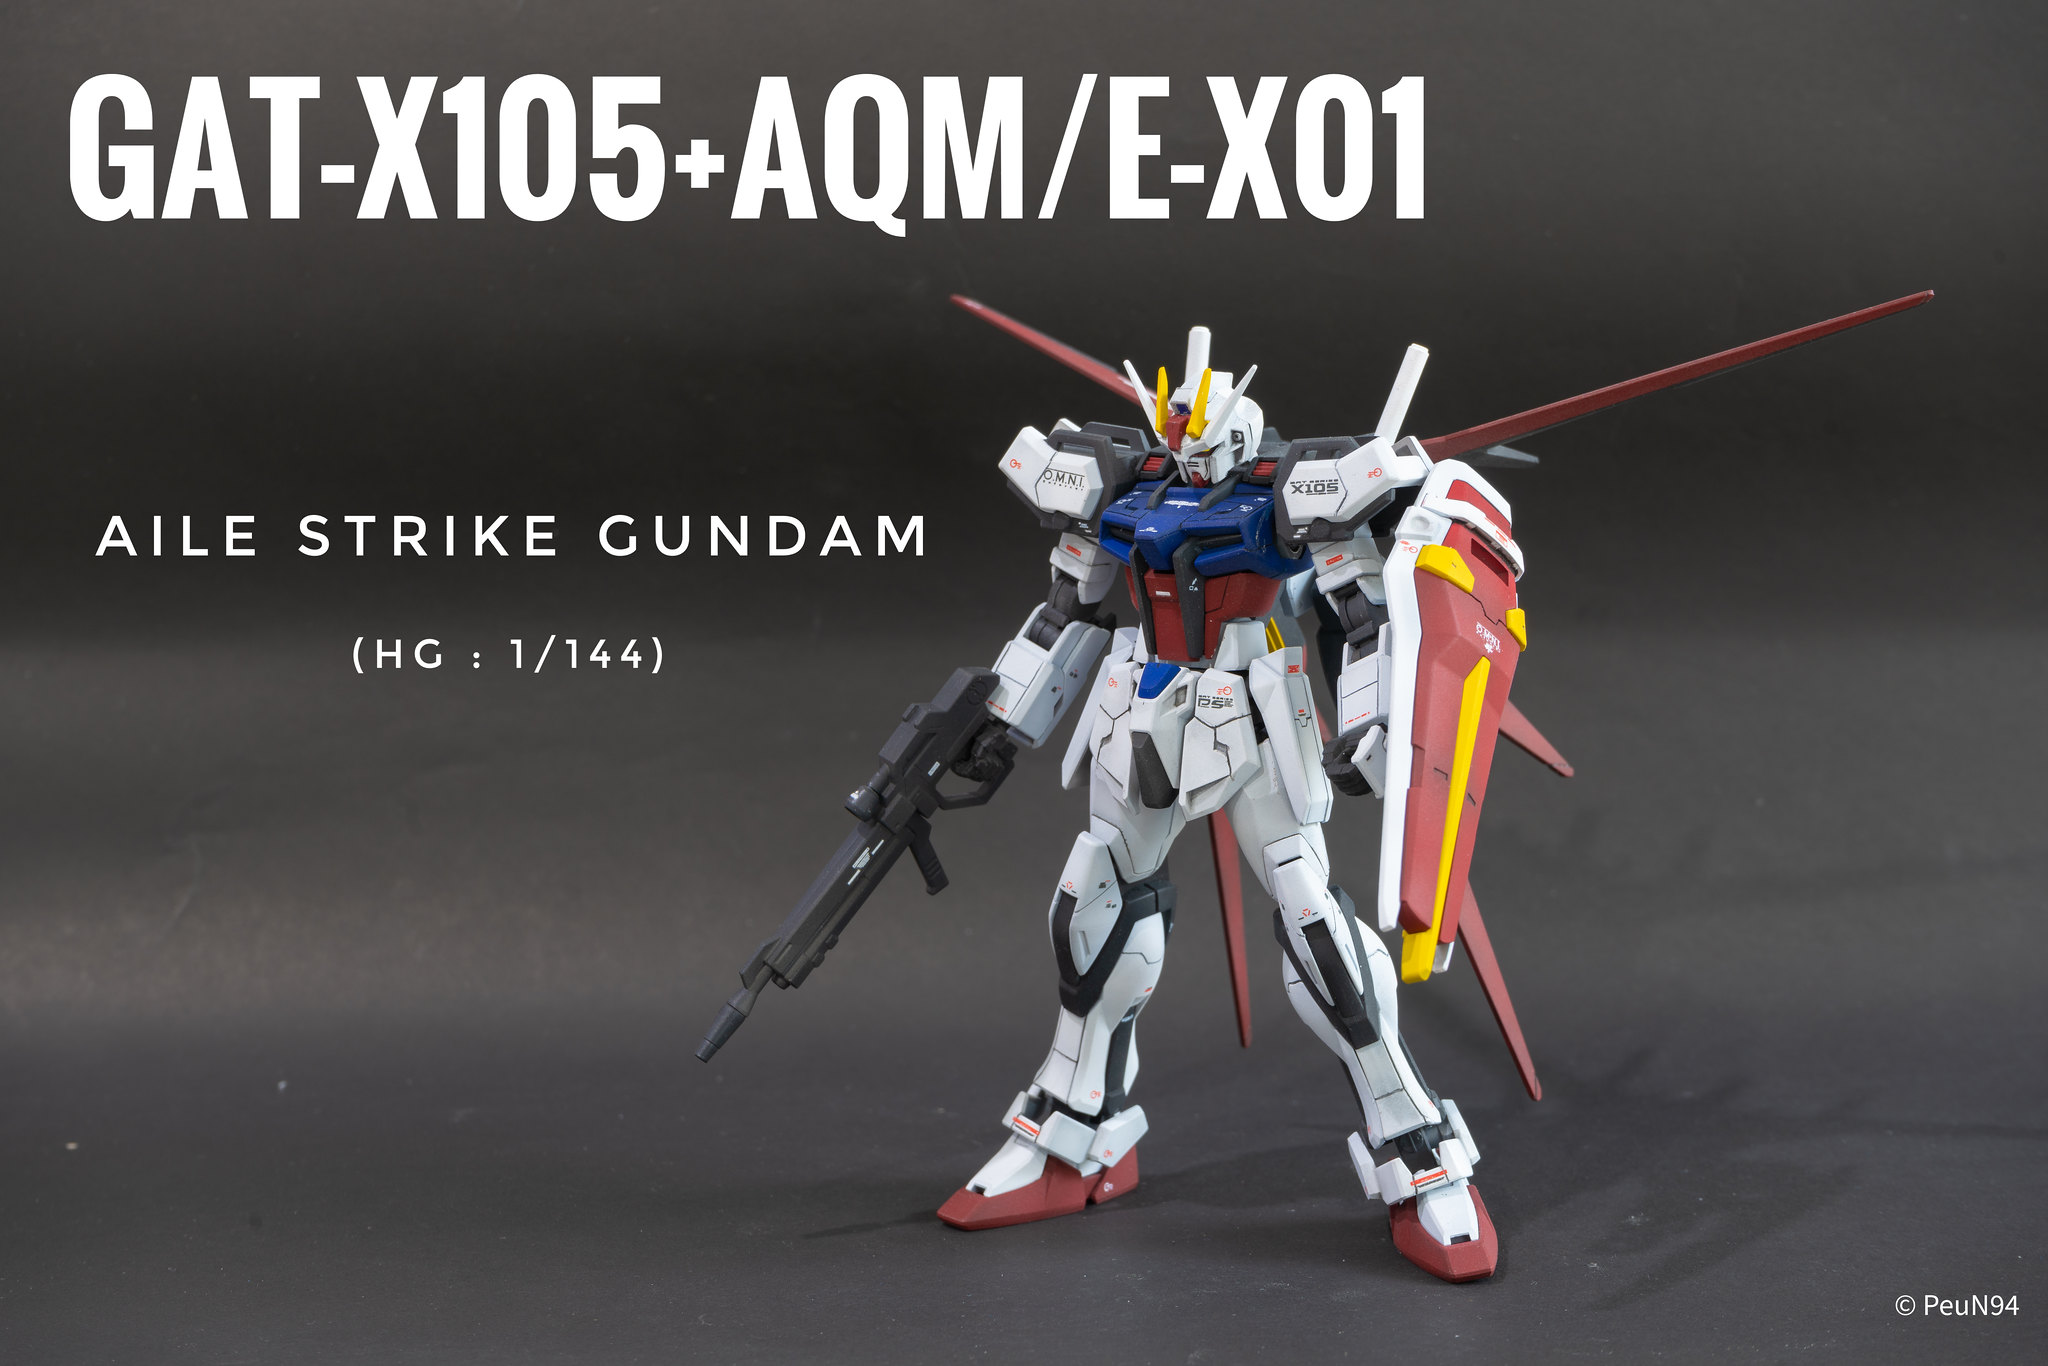 [HG: 1/144] Aile Strike Gundam (GAT-X105+AQM/E-X01) โดย pkw86